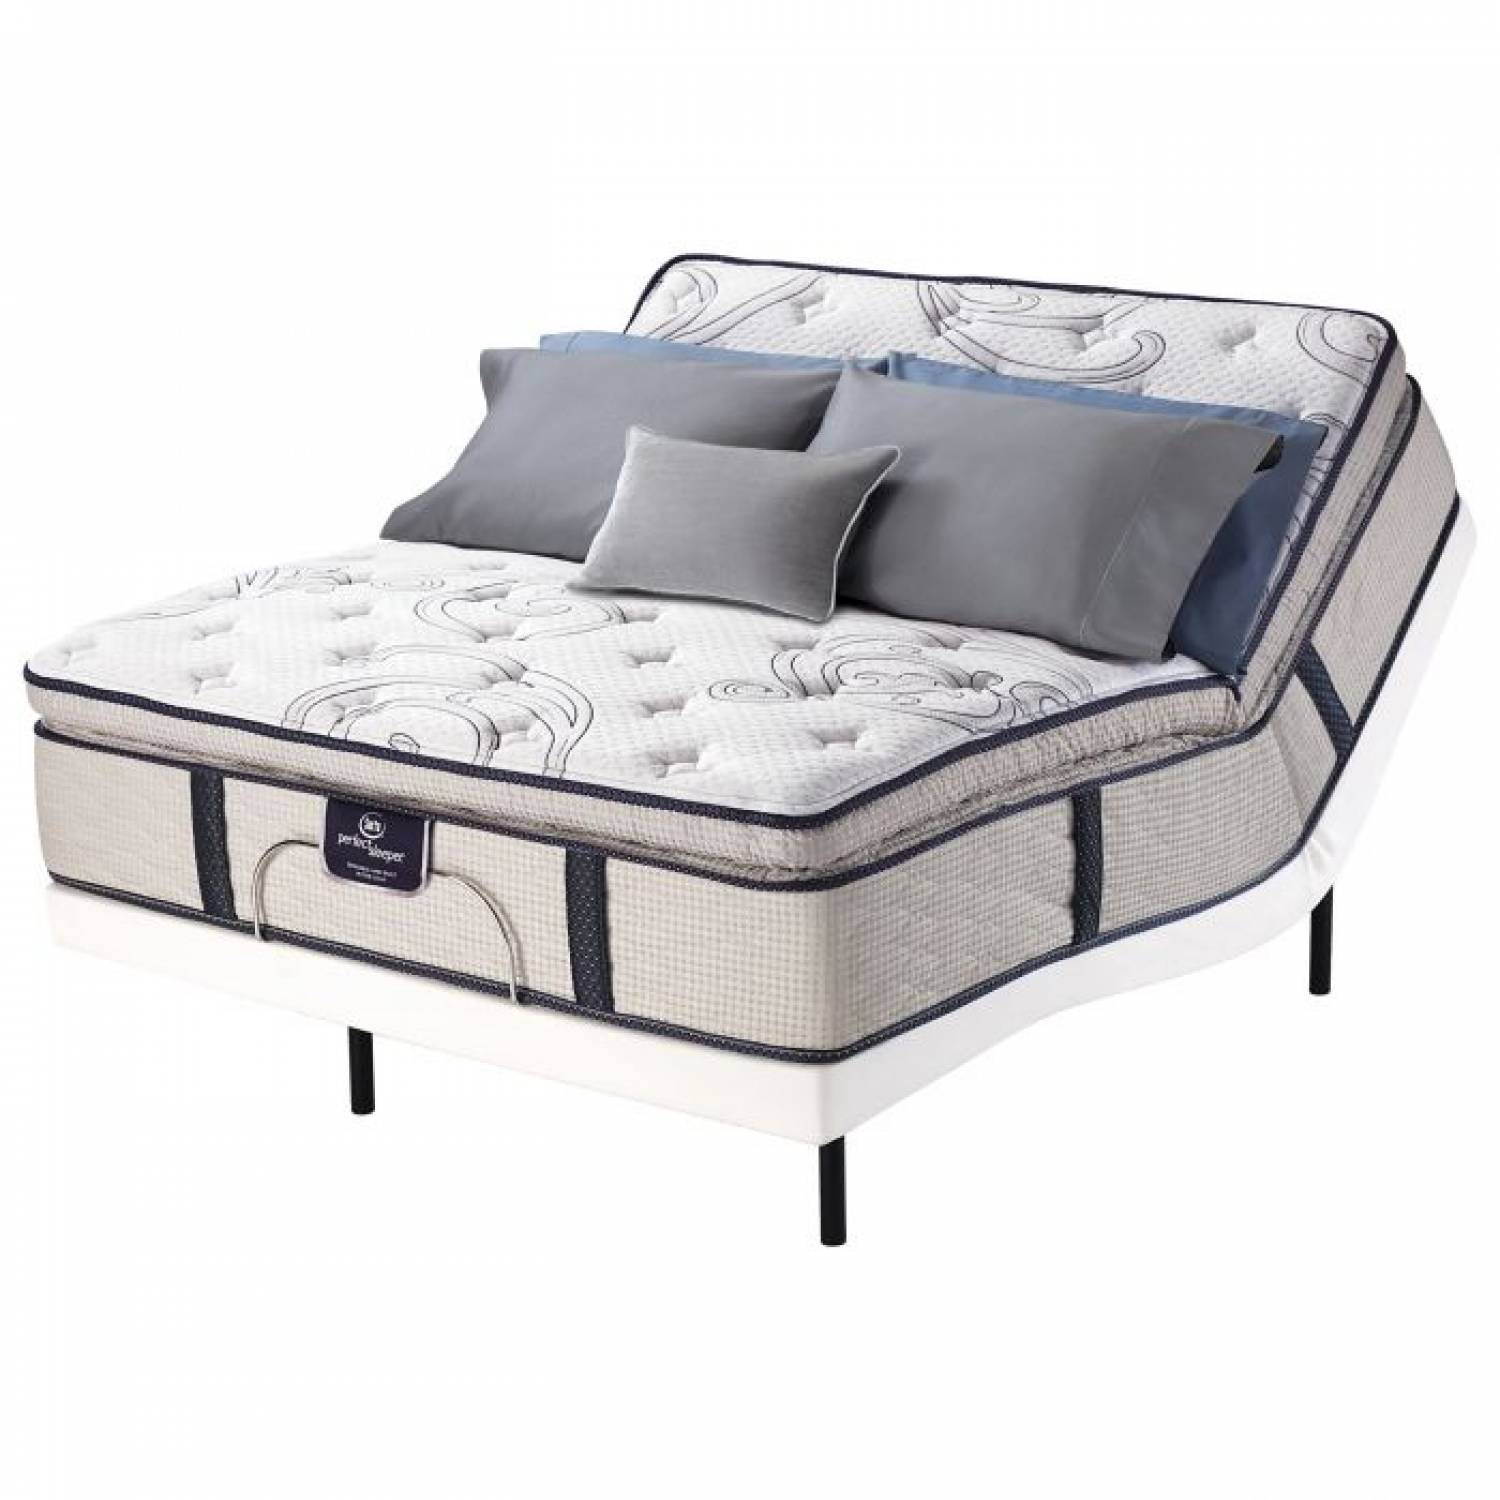 Kleinmon 500 Super Pillow Top Mattress, Serta Pillow Top King Size Bed